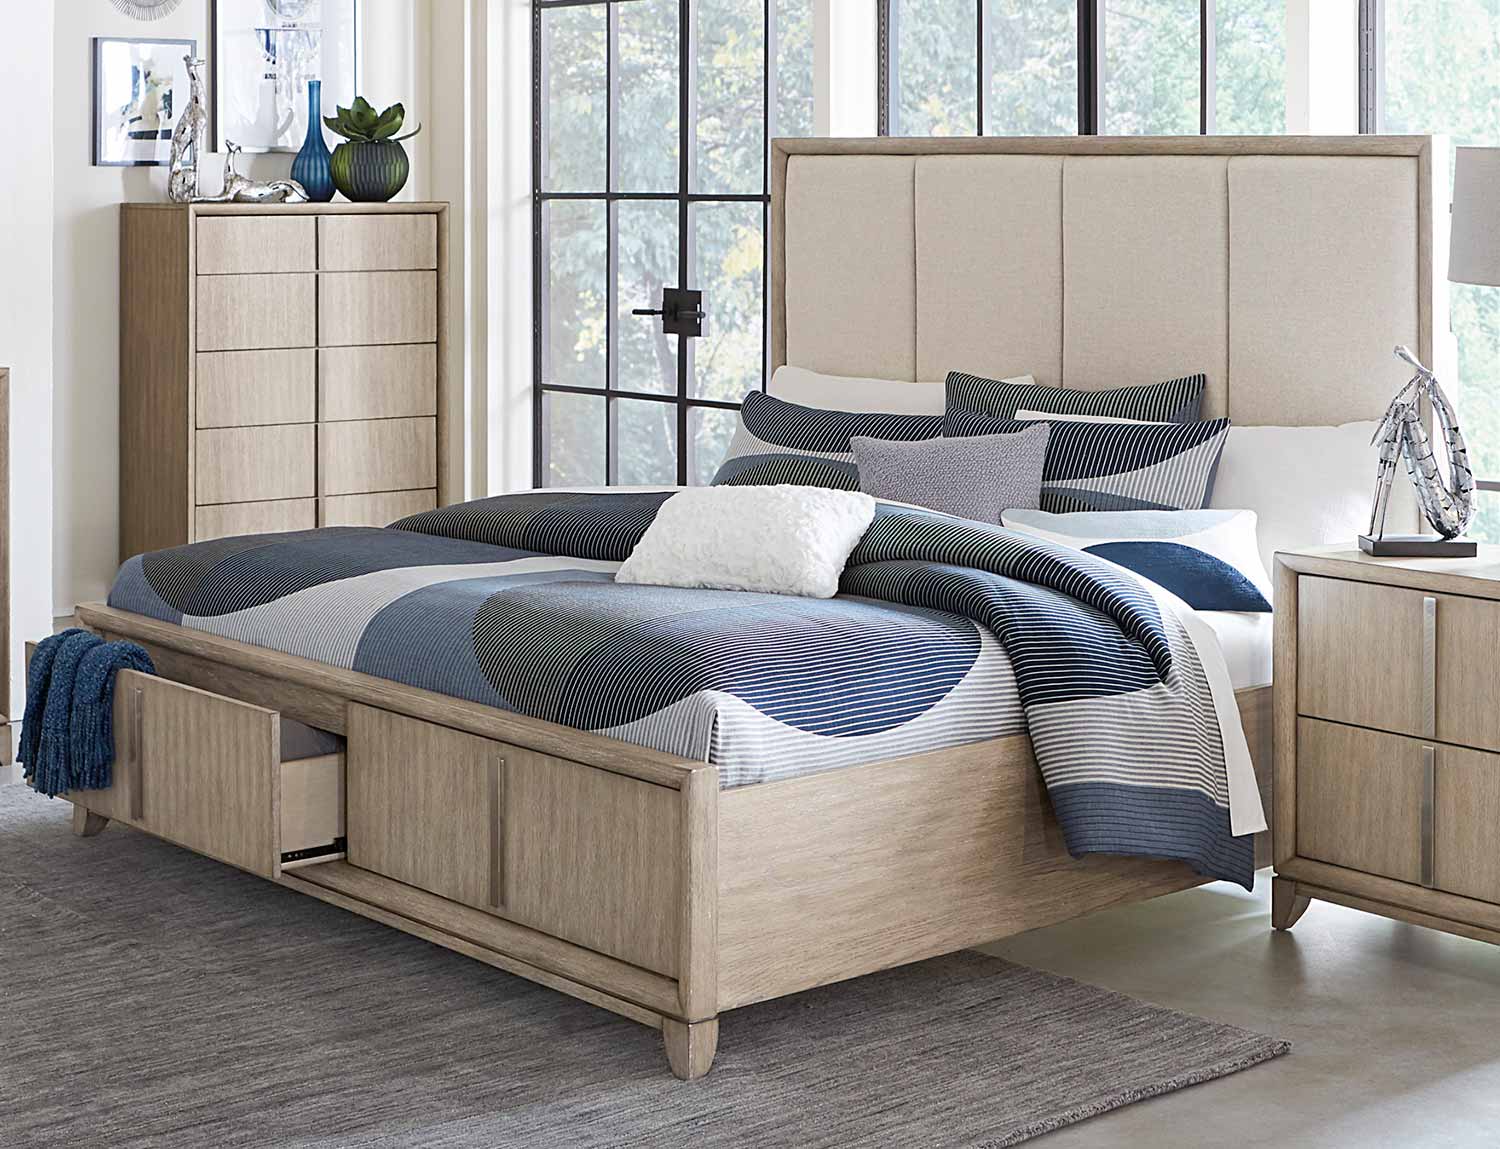 Homelegance McKewen Upholsterd Platform Bed with Footboard Storage - Light Gray